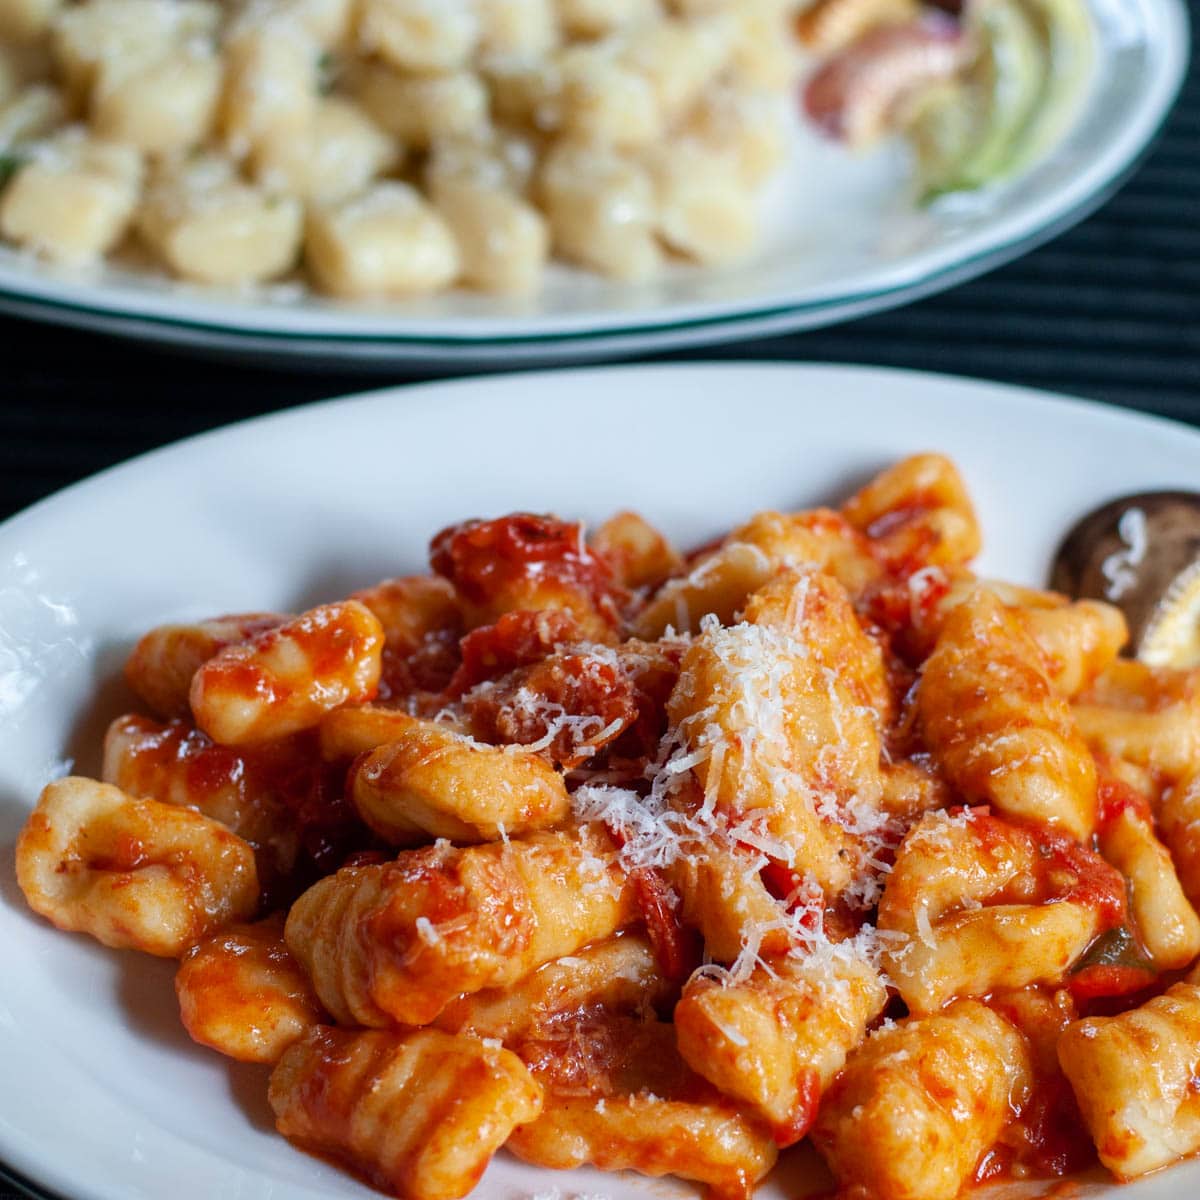 Italian Gnocchi served with tomato sauce